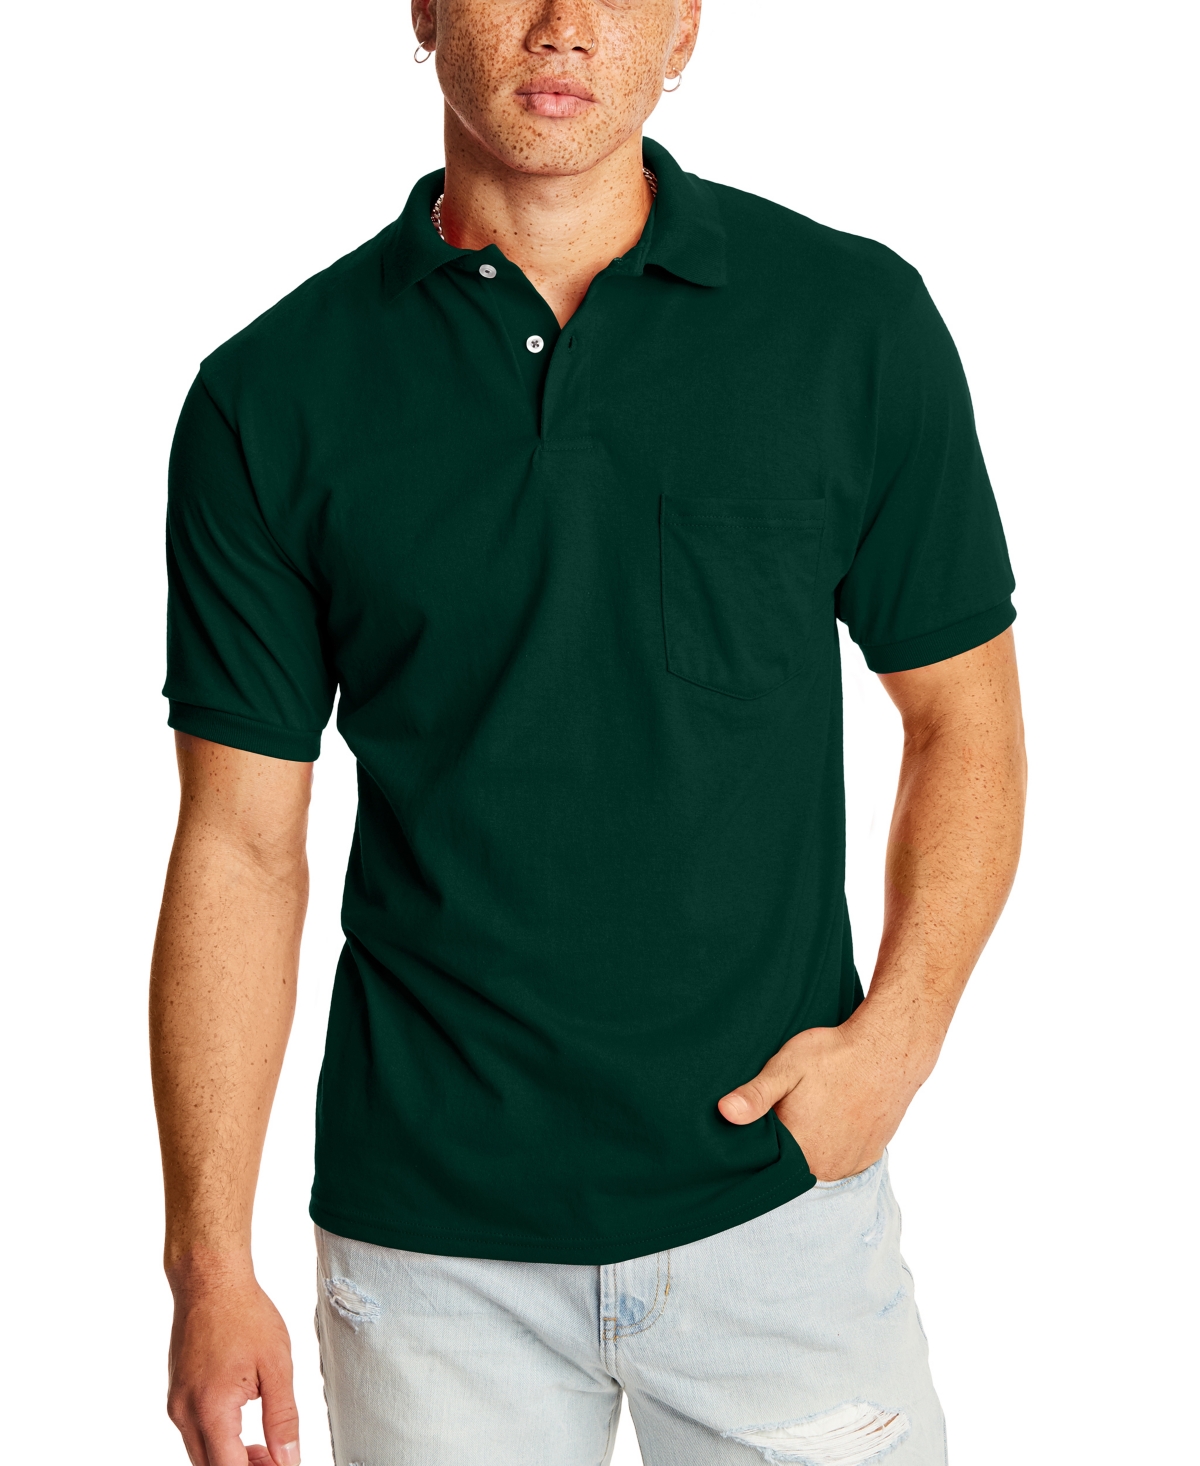 Hanes Ecosmart Men's Pocket Polo Shirt, 2-pack In Green